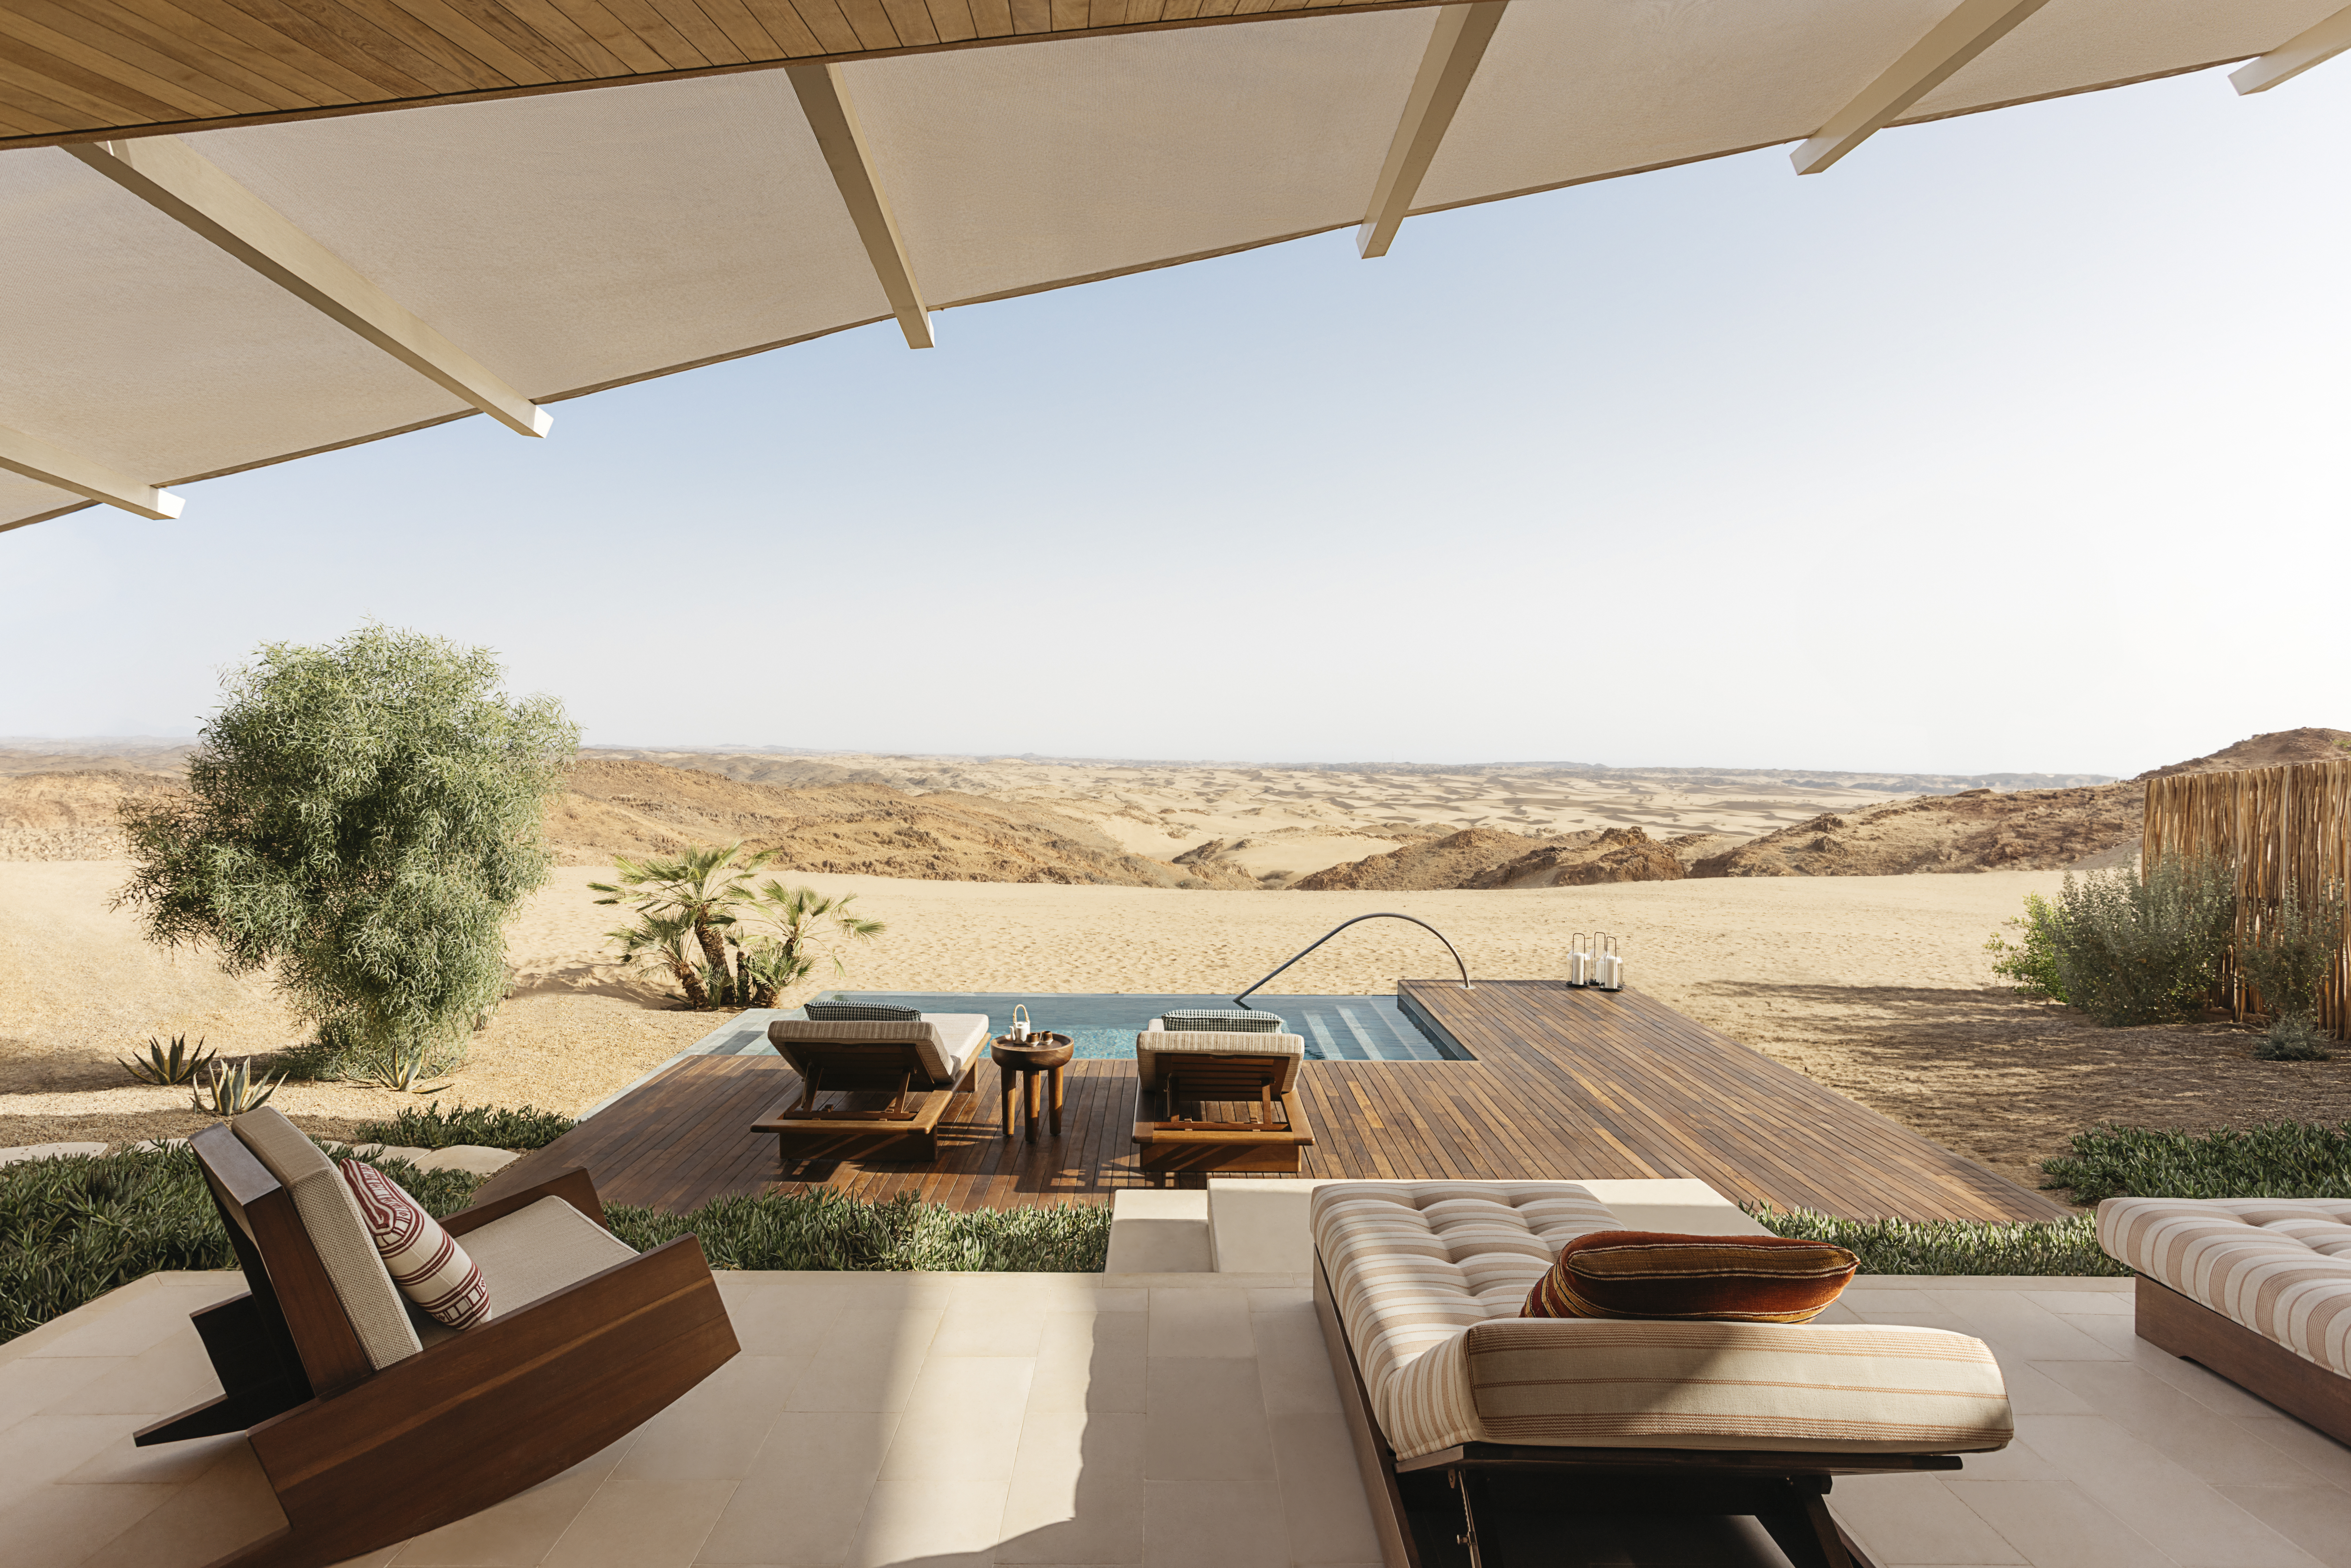 Six Senses Southern Dunes is located in The Red Sea development in Saudi Arabia. Photo: Six Senses